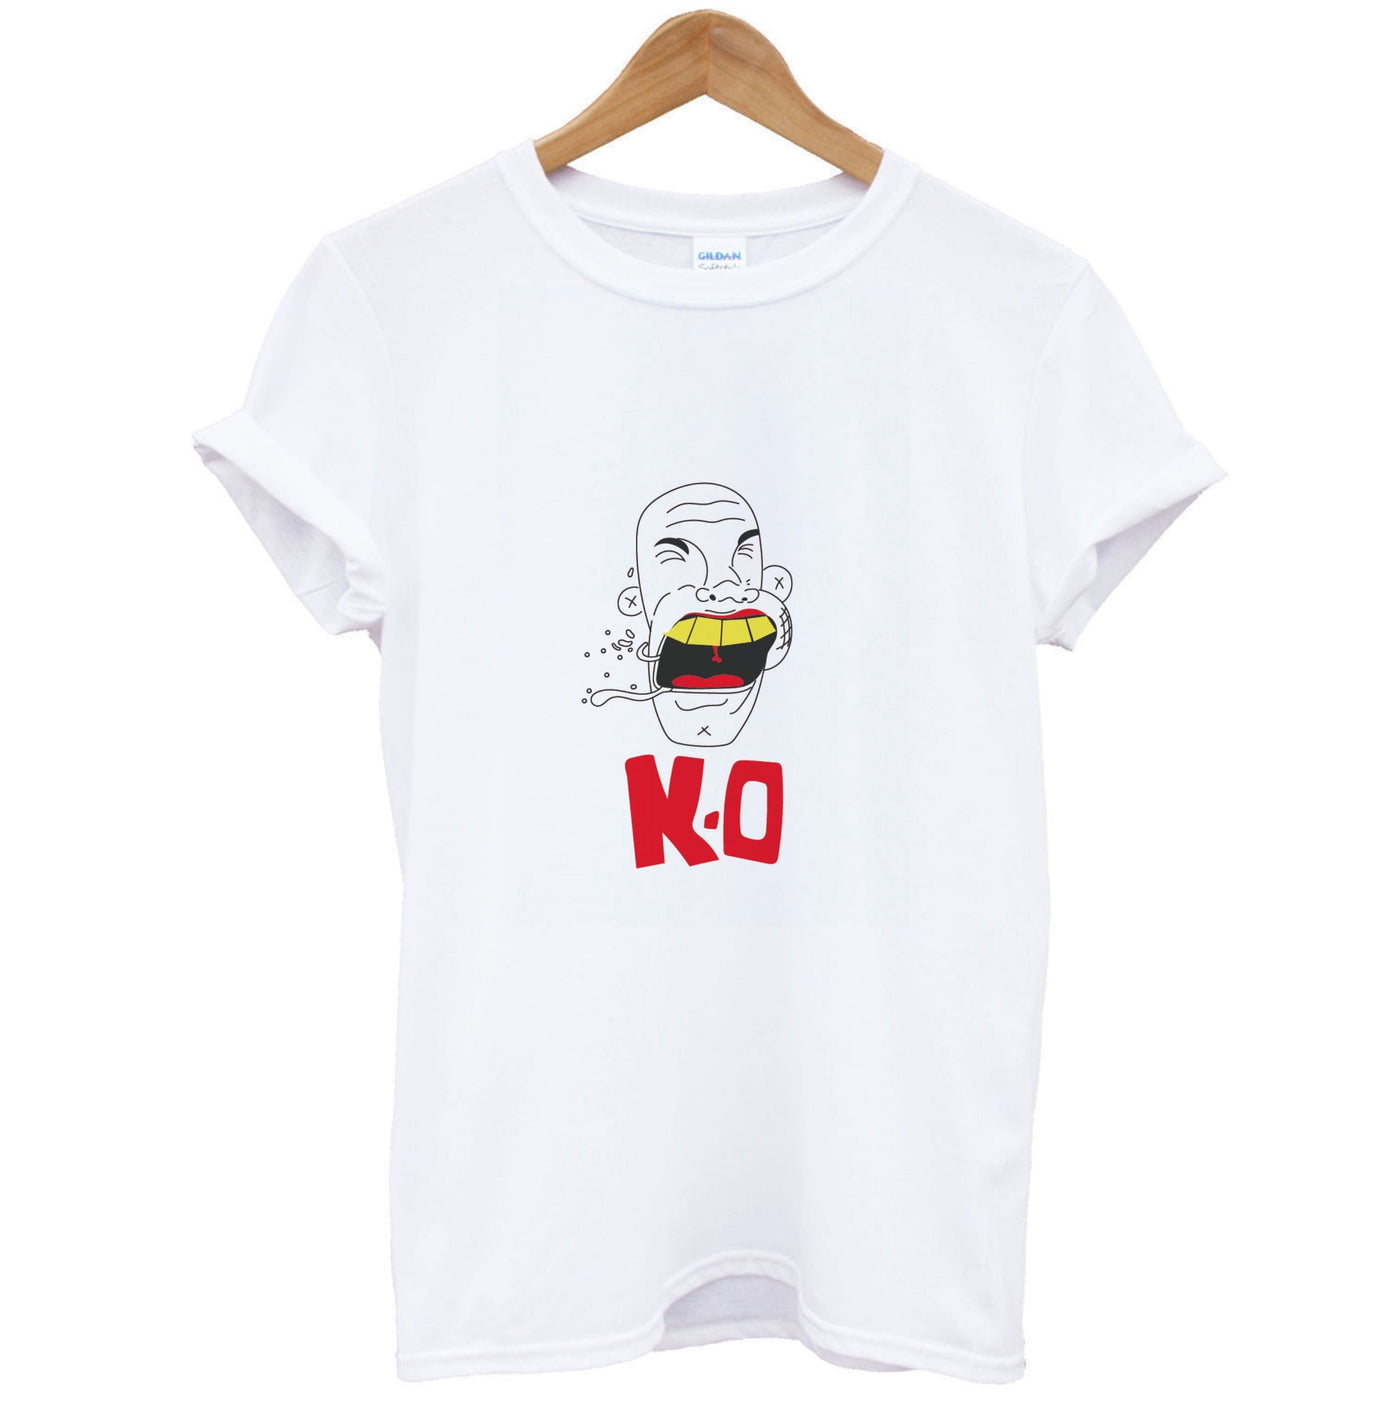 K.O - Boxing T-Shirt